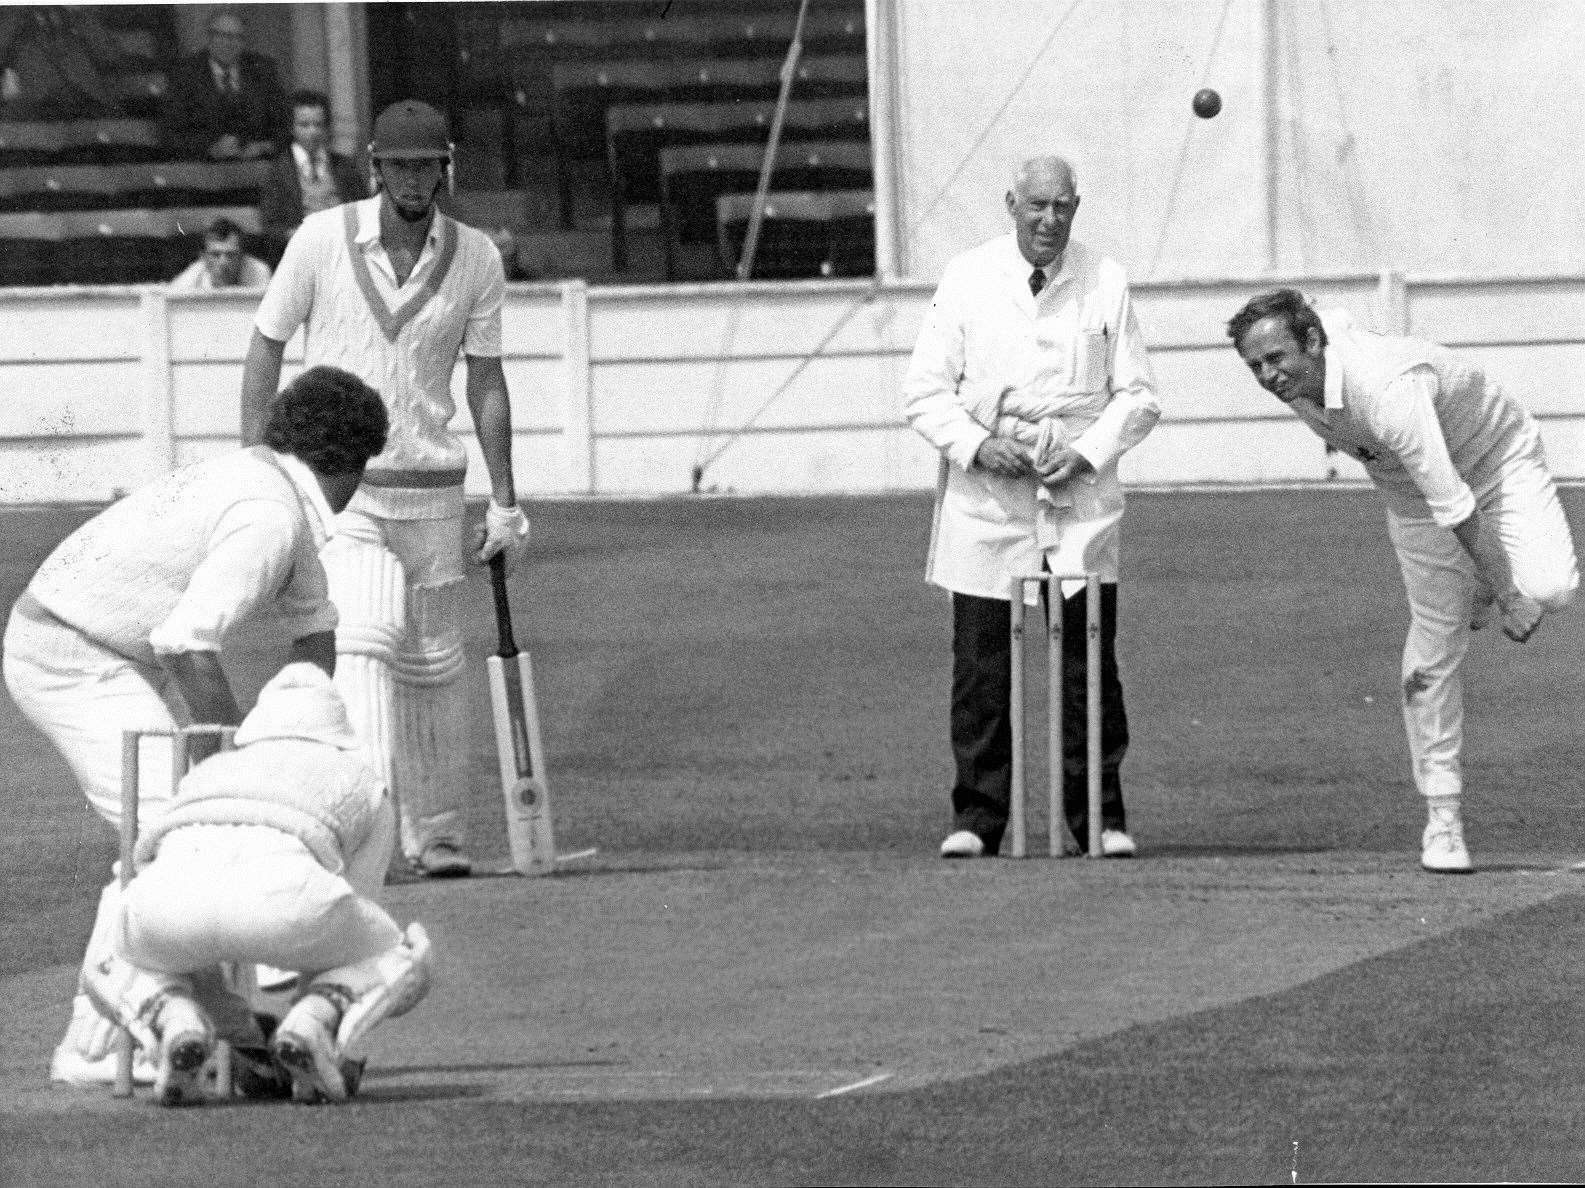 Former Kent and England cricketer Derek Underwood bowling, 1981